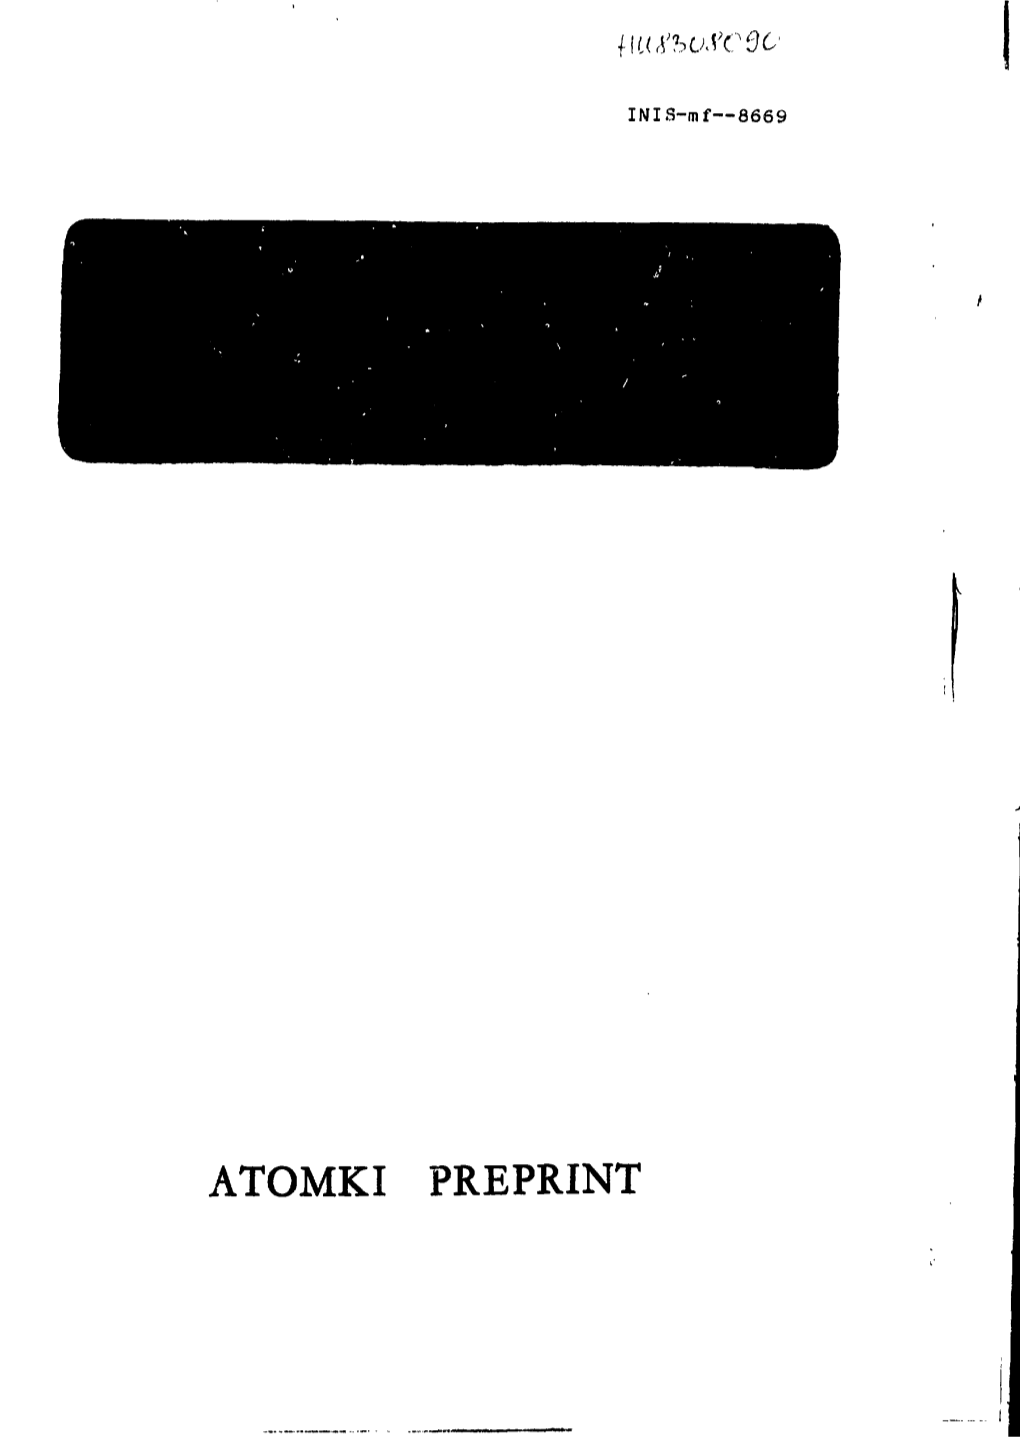 Atomki Preprint Hu Issn 0231-2468